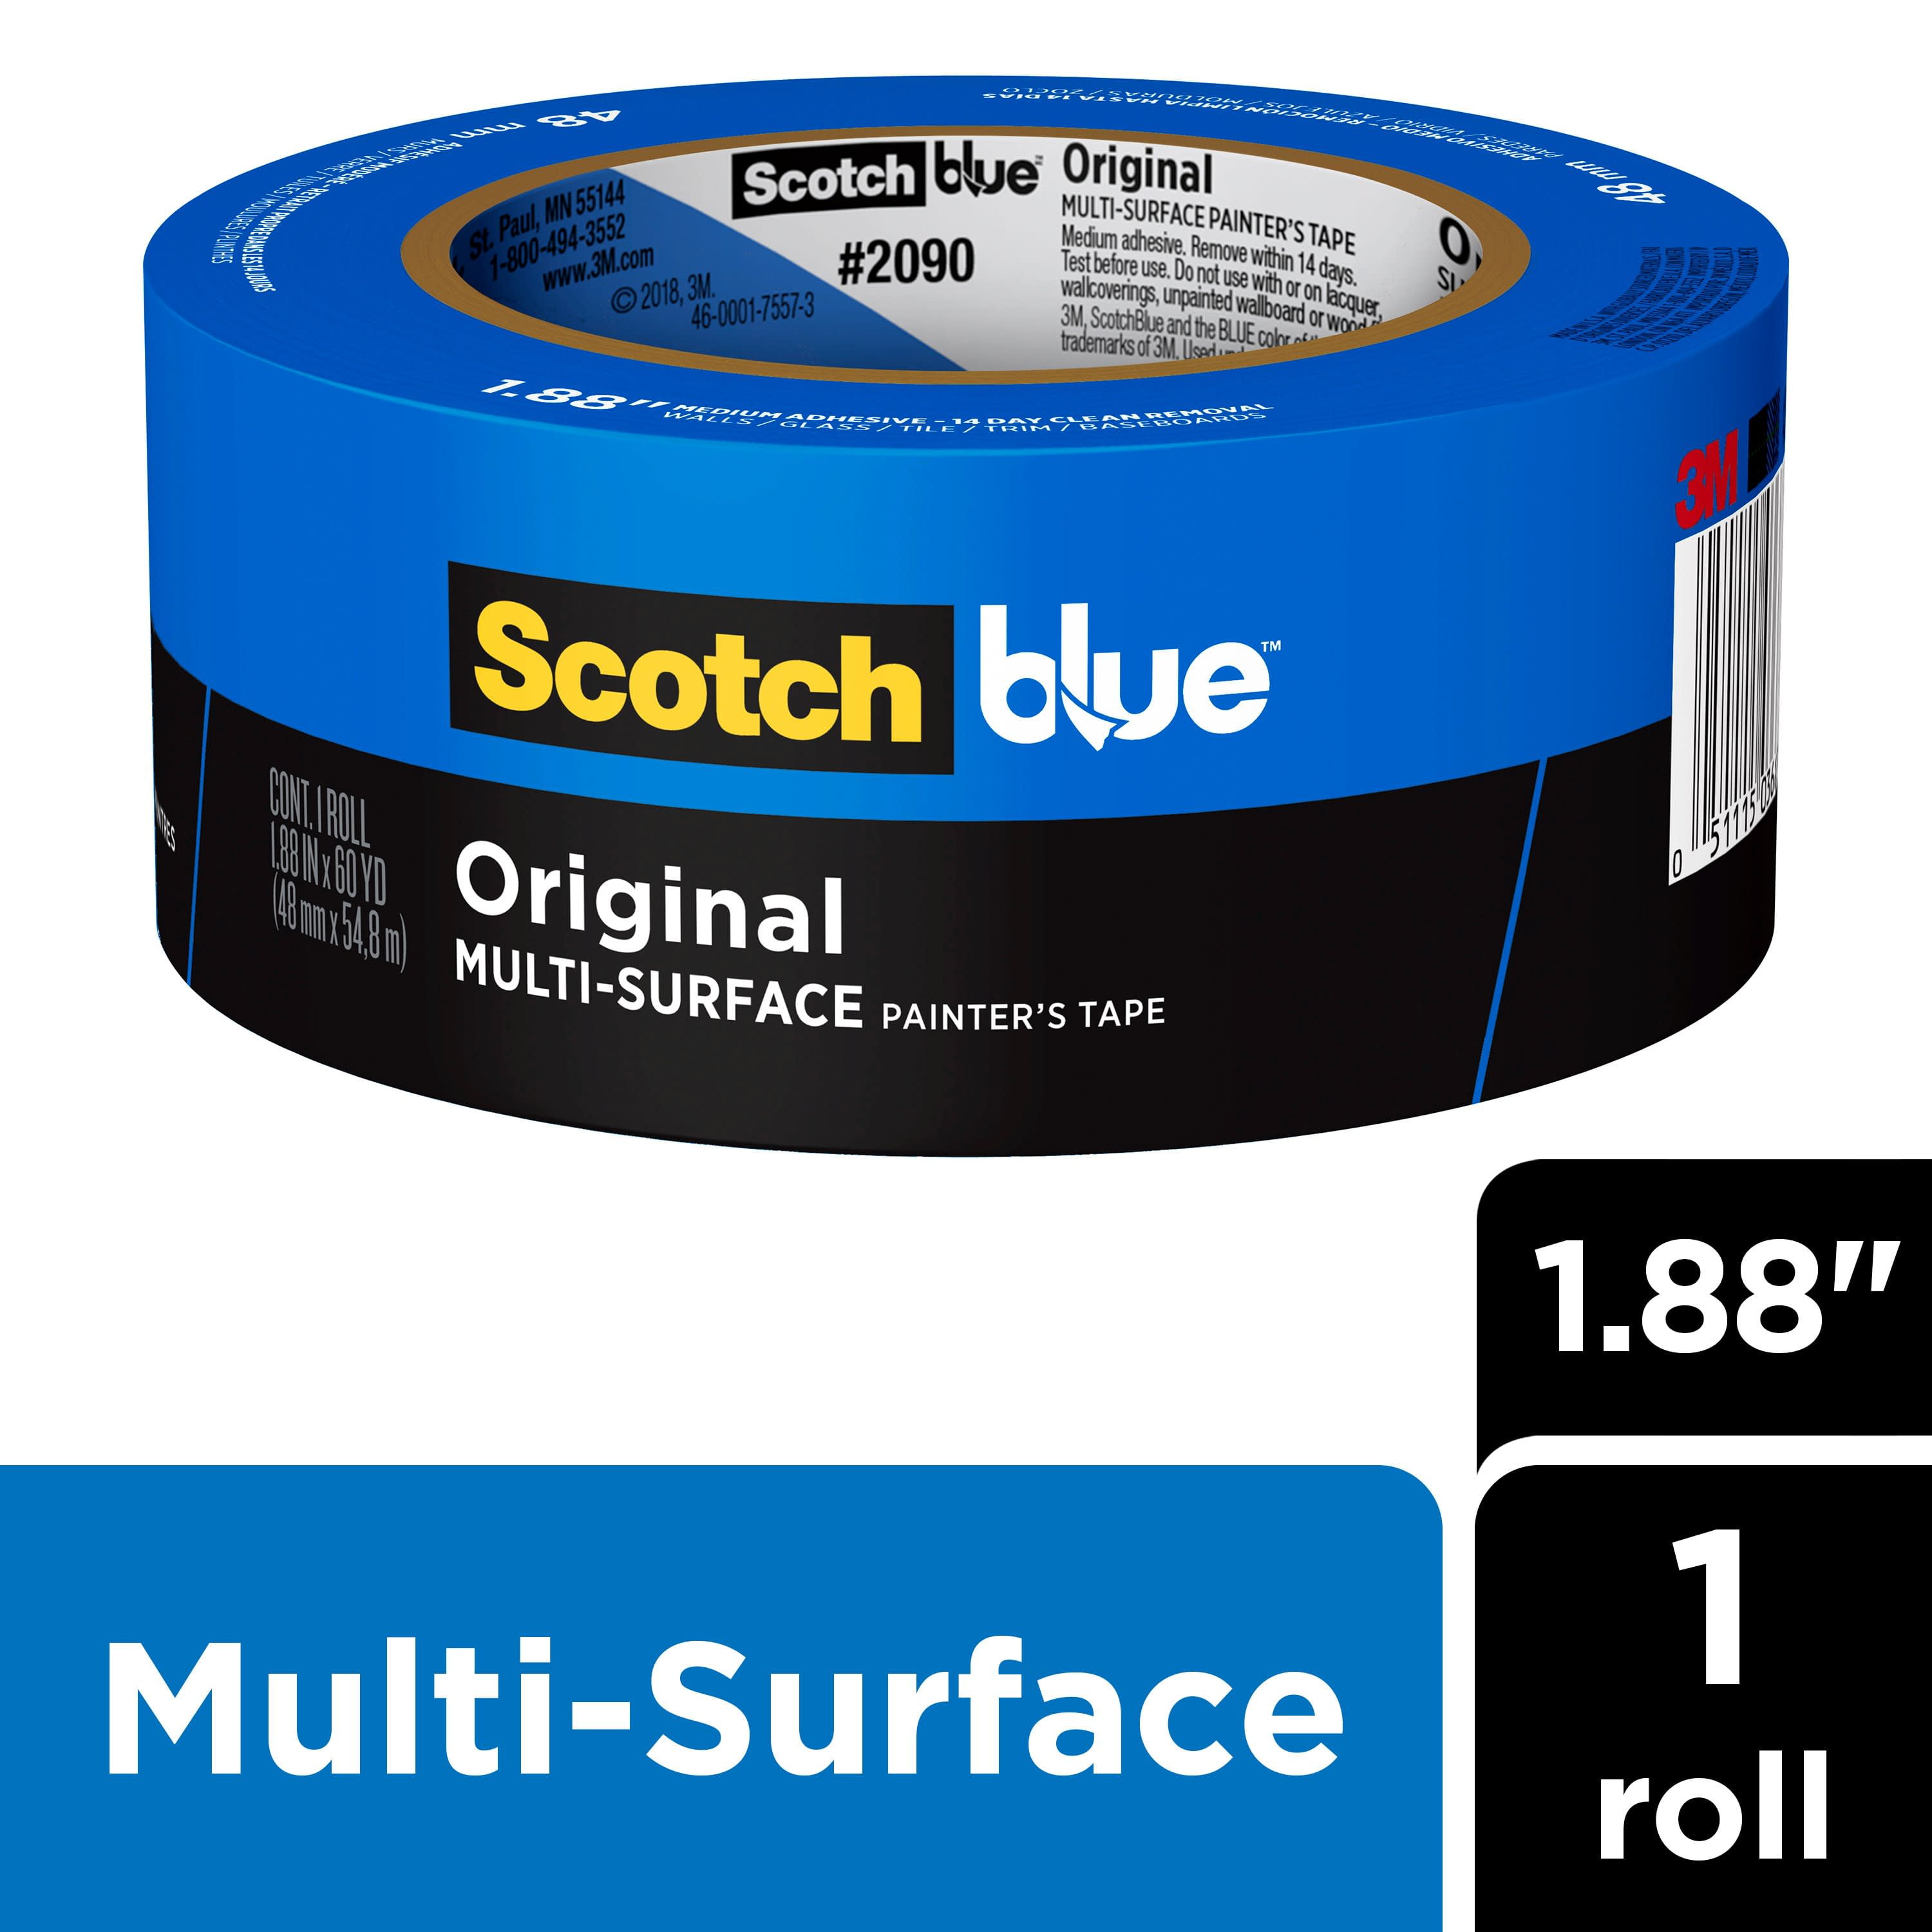 Buy Strong Efficient Authentic wholesale painters tape 